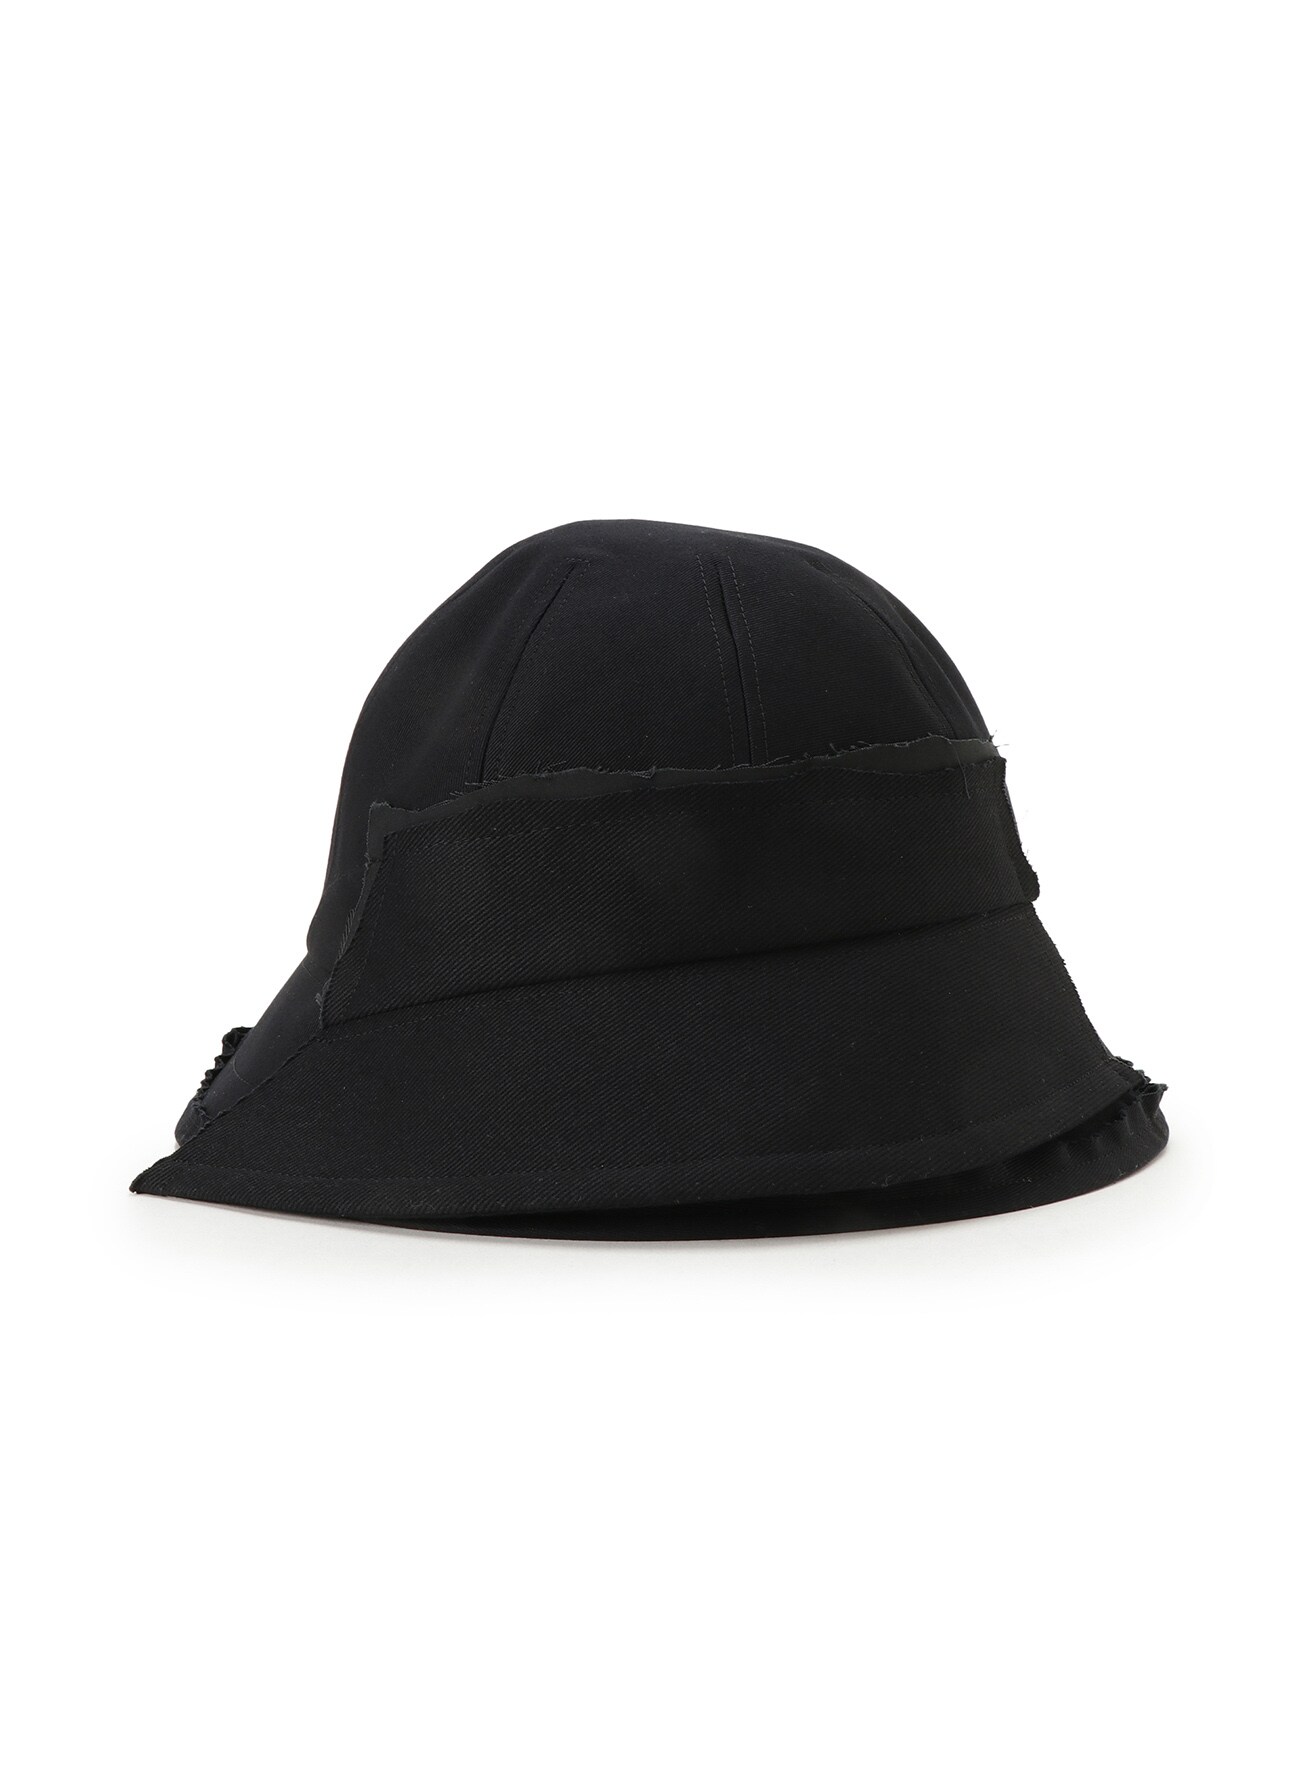 Cotton gabardine ishica Bell Hat